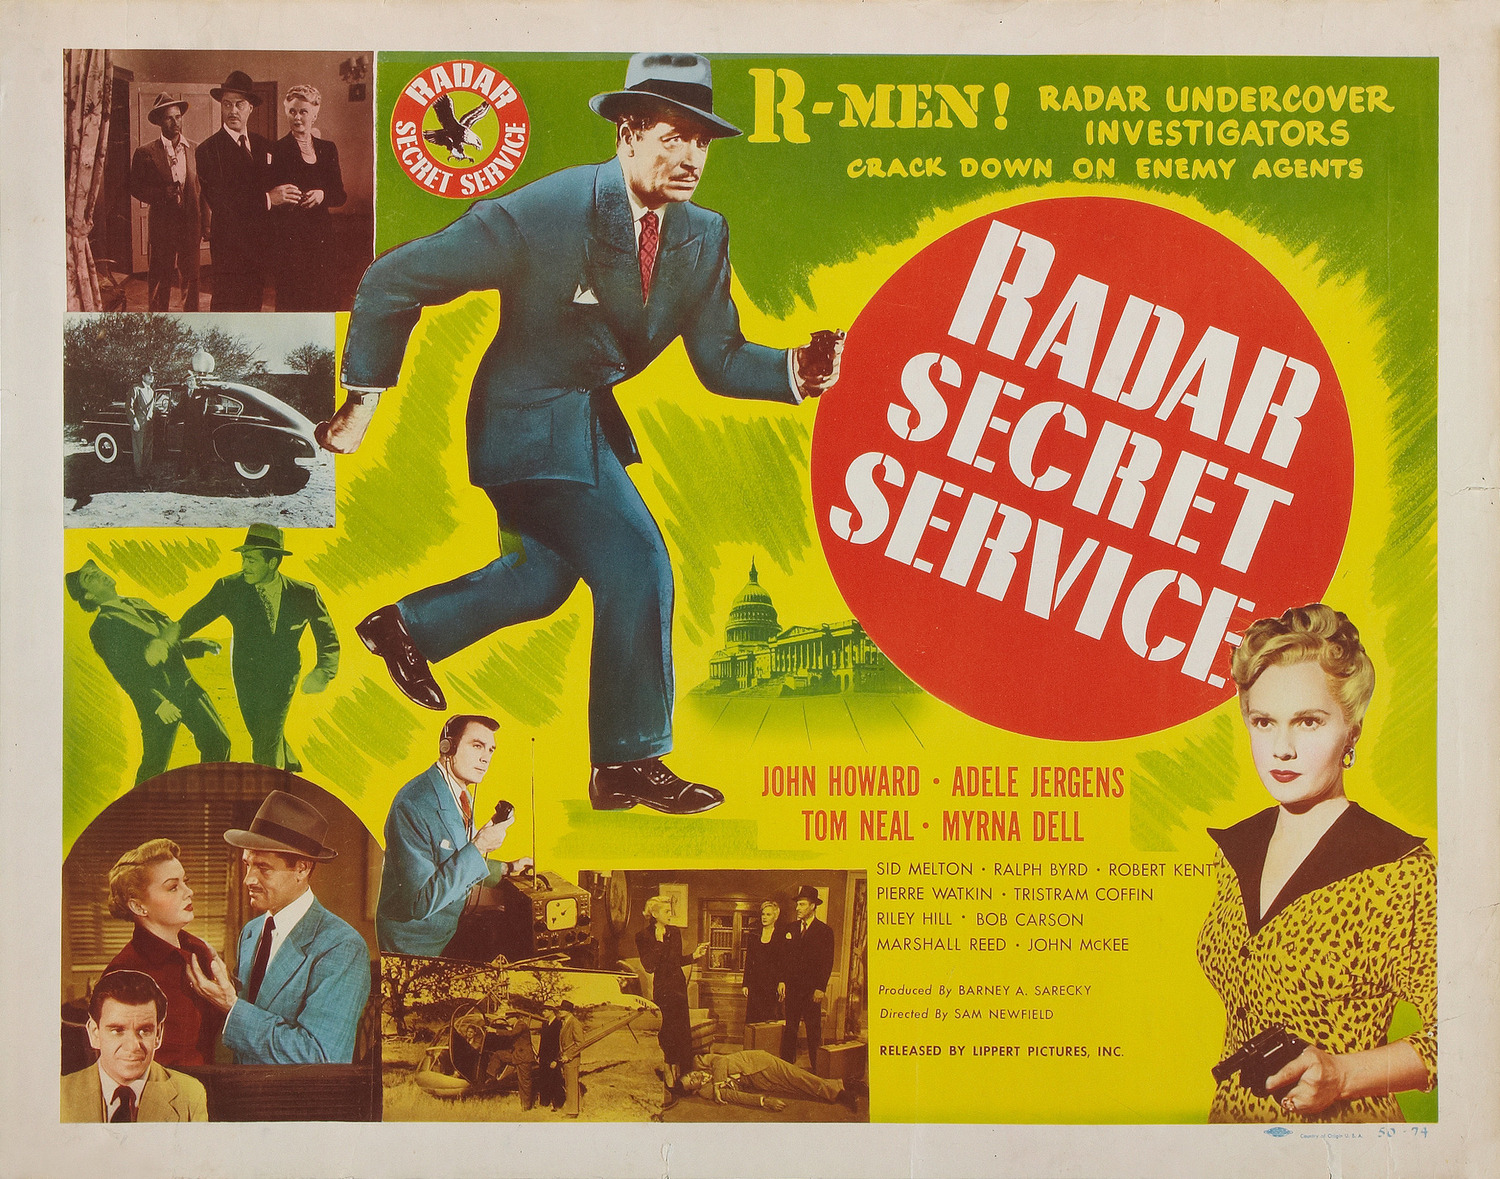 Extra Large Movie Poster Image for Radar Secret Service (#2 of 3)